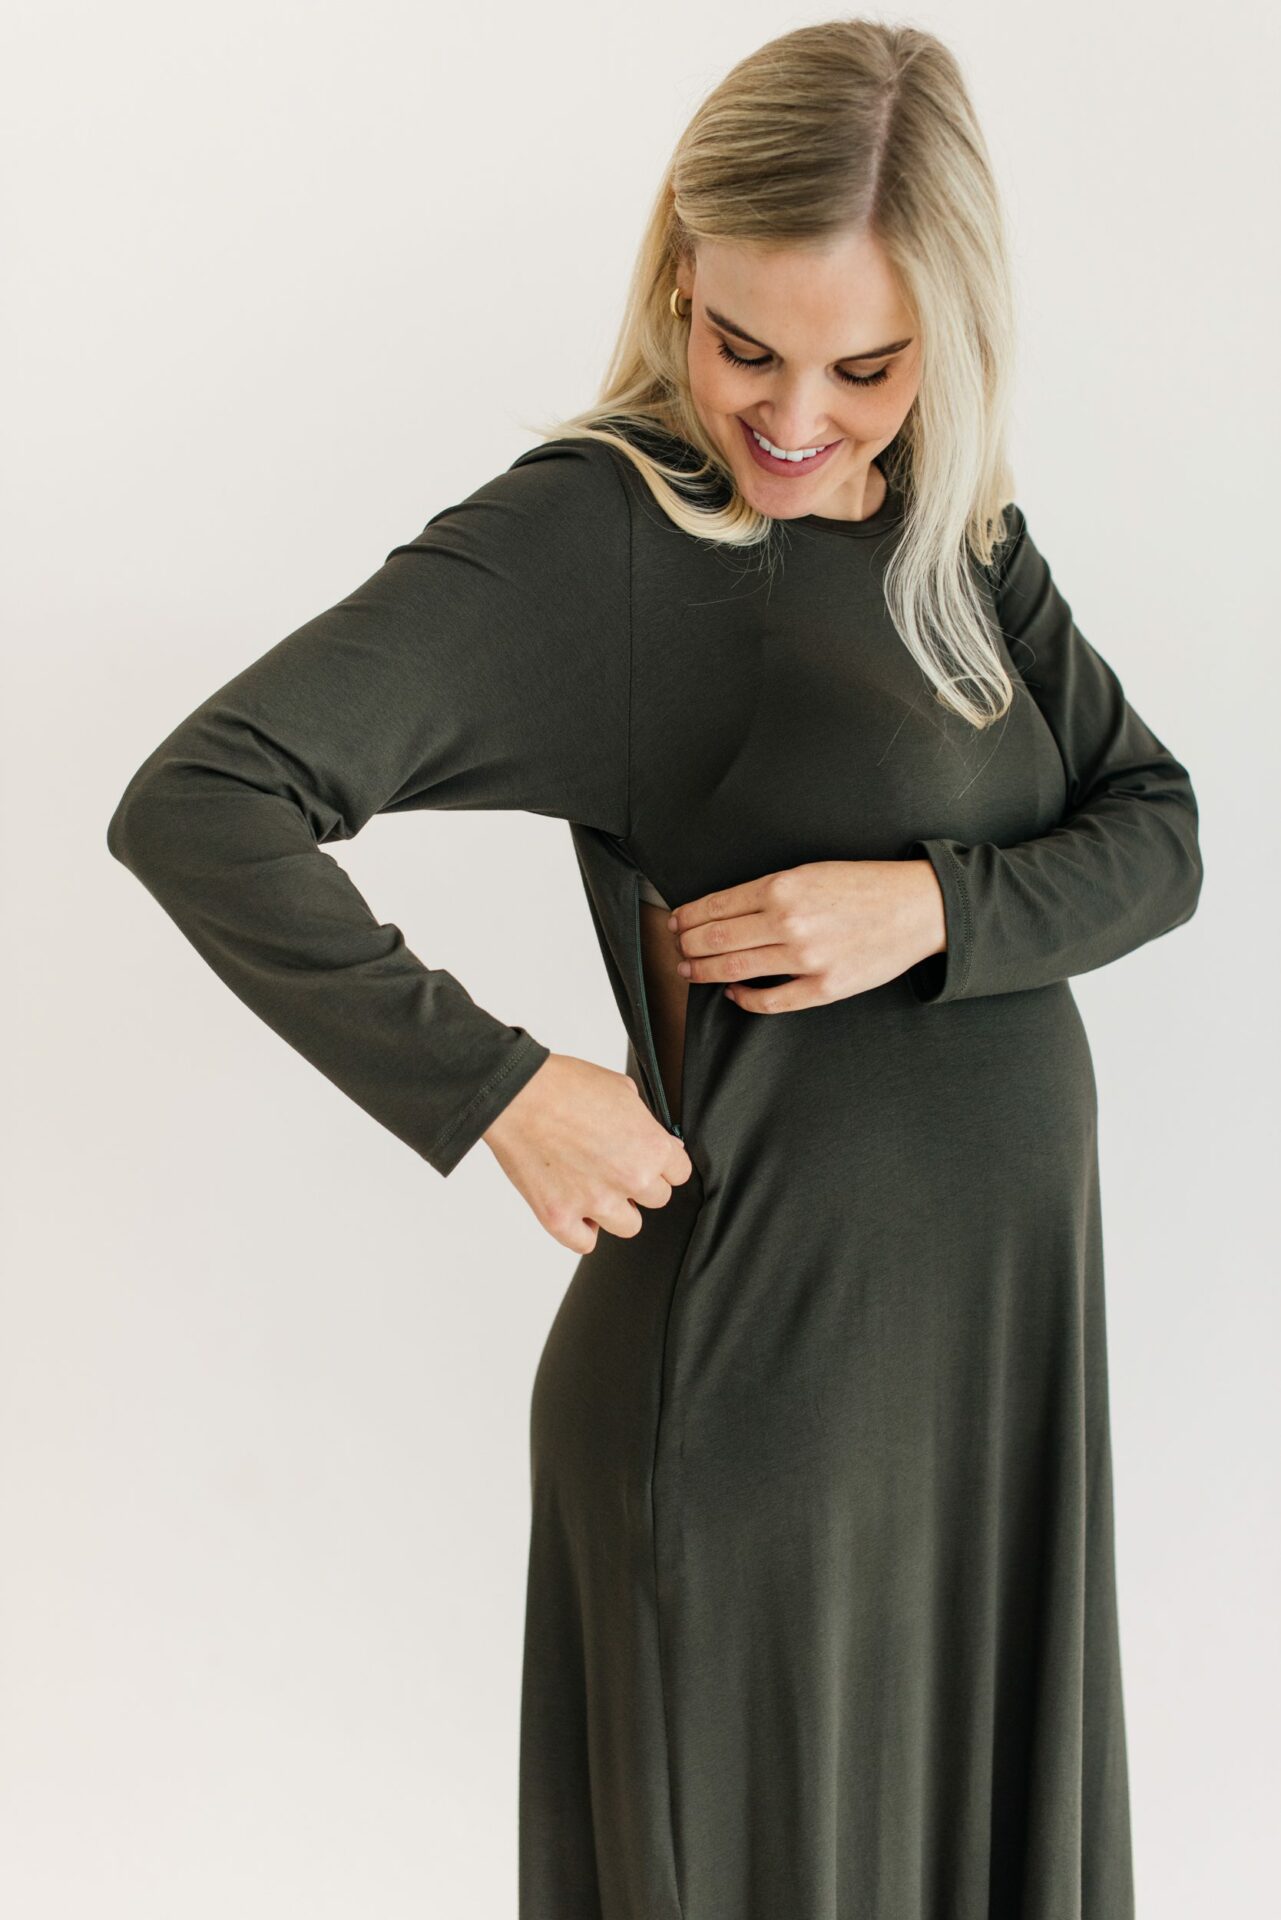 Buy Classic Momsy Dress Long Sleeve Olive - Momsy Maternity, Nursing ...